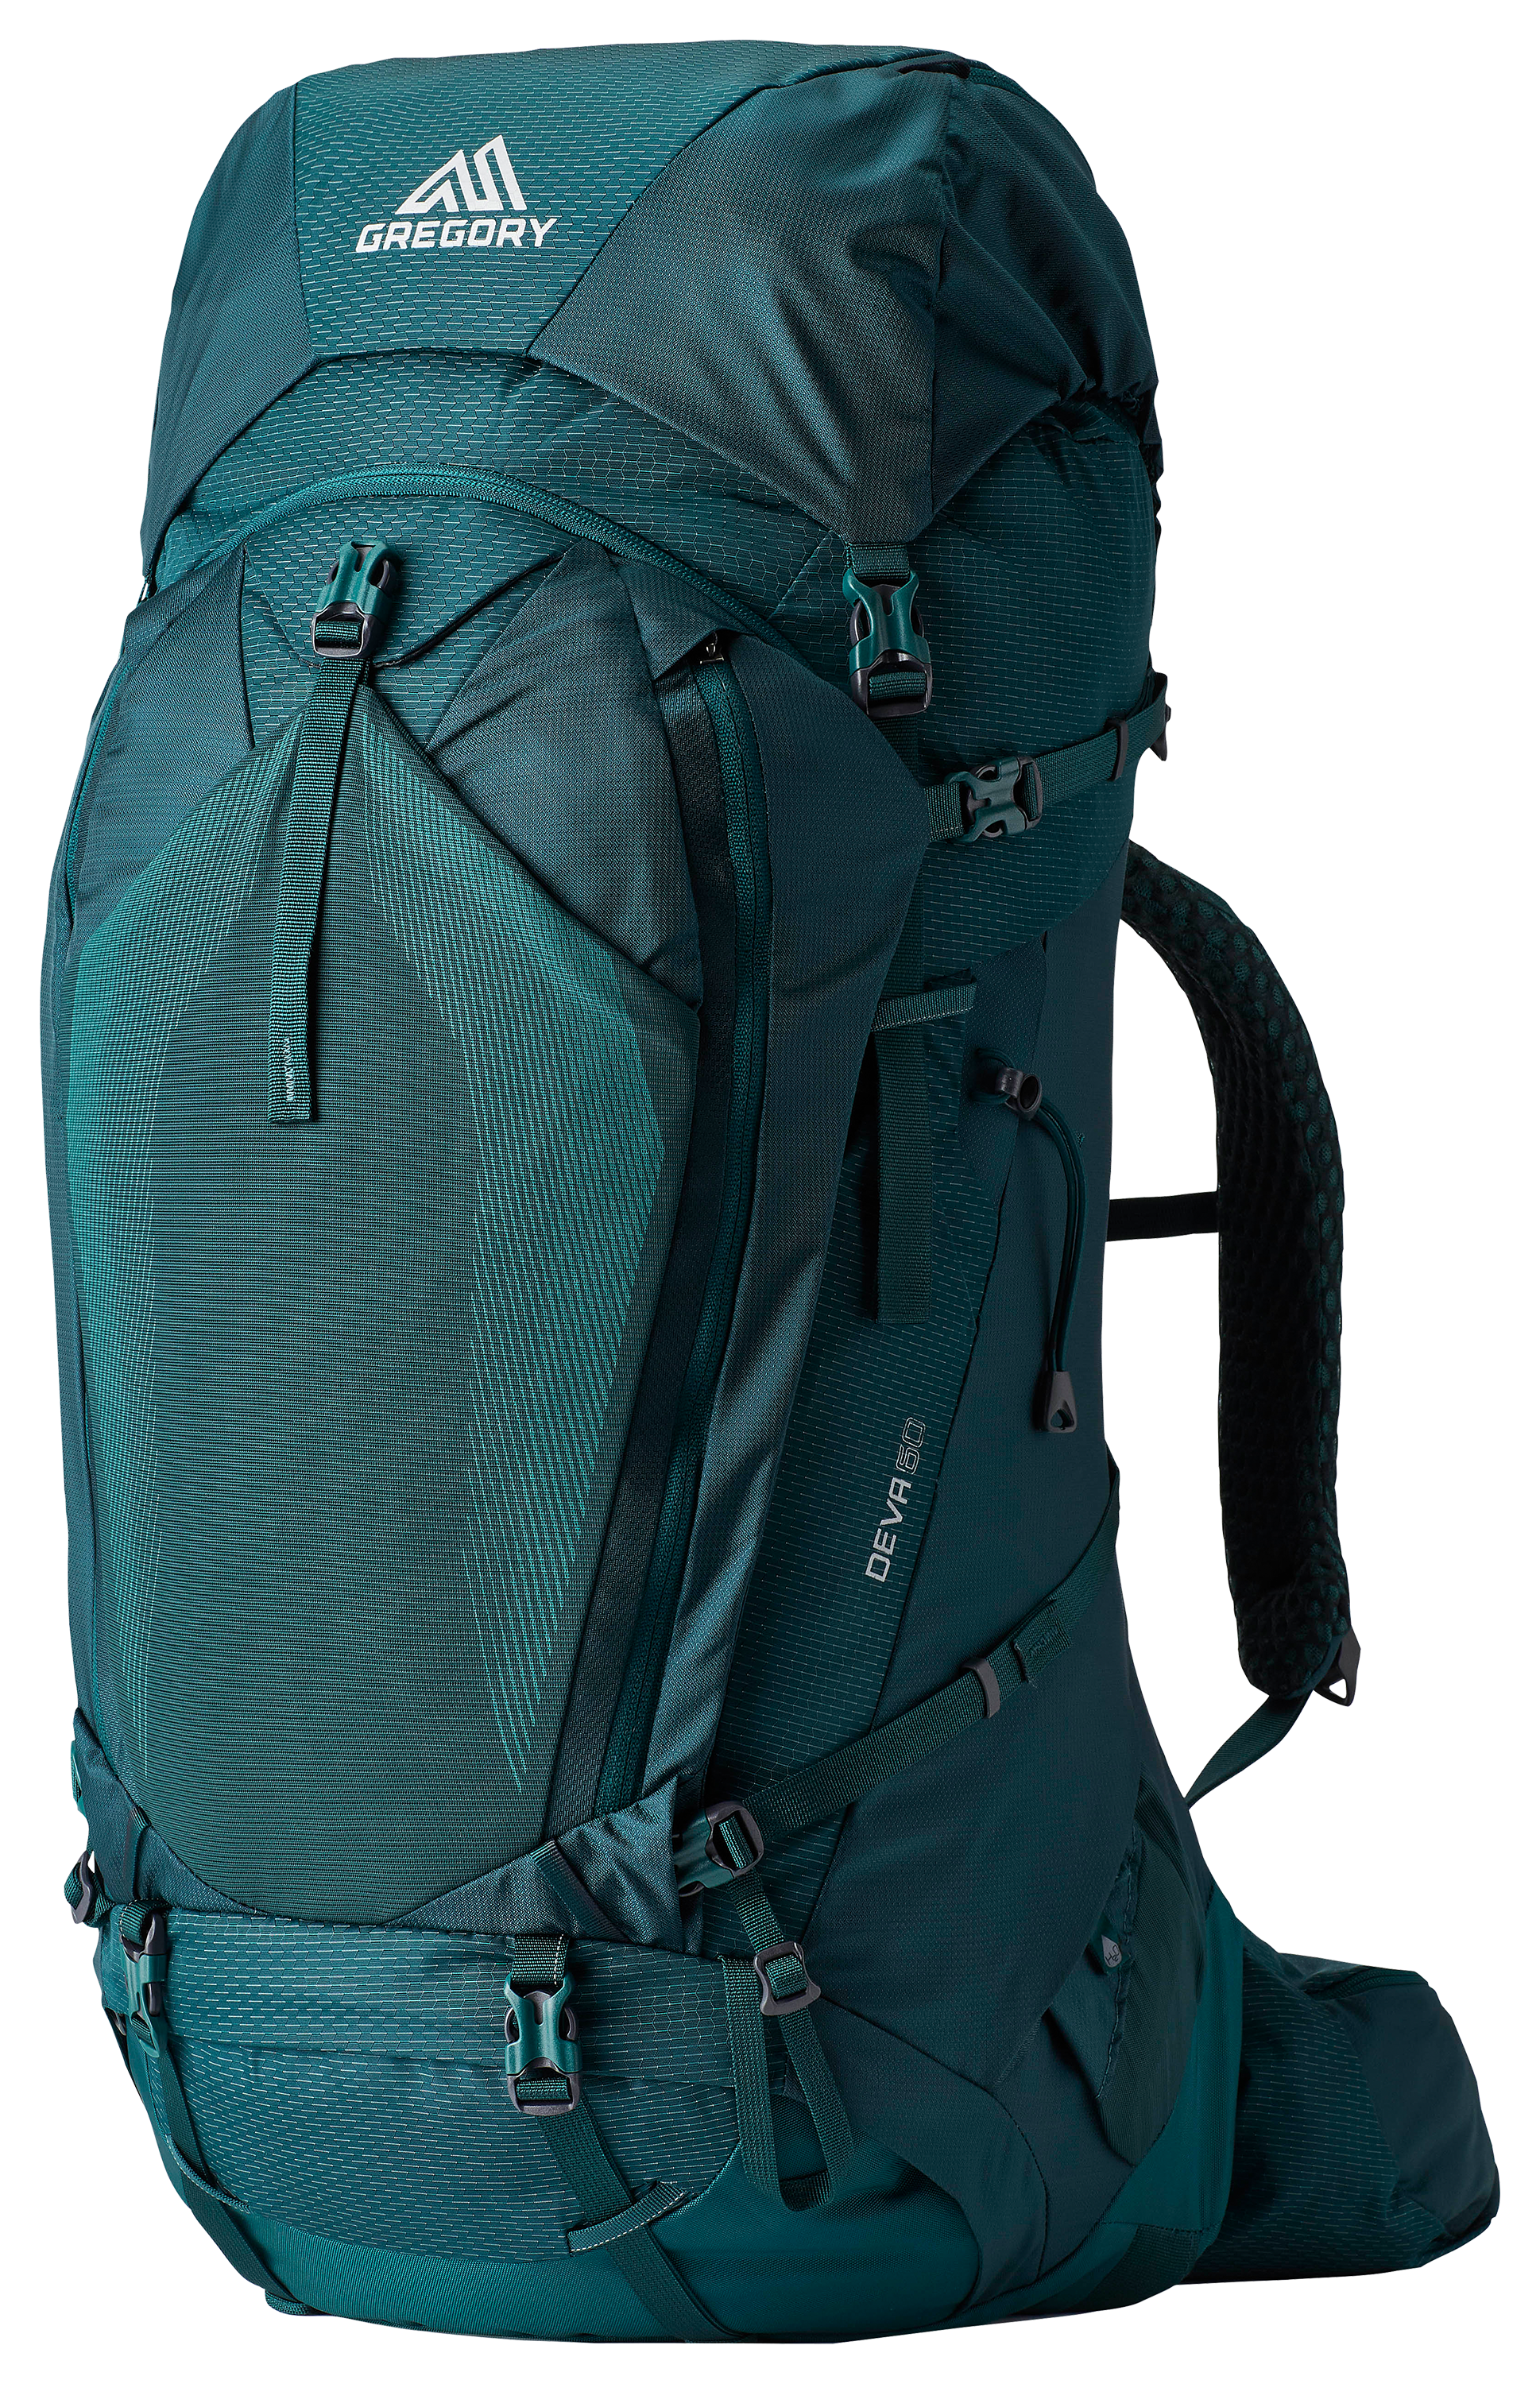 Gregory Deva 60 Backpack for Ladies - Emerald Green - M